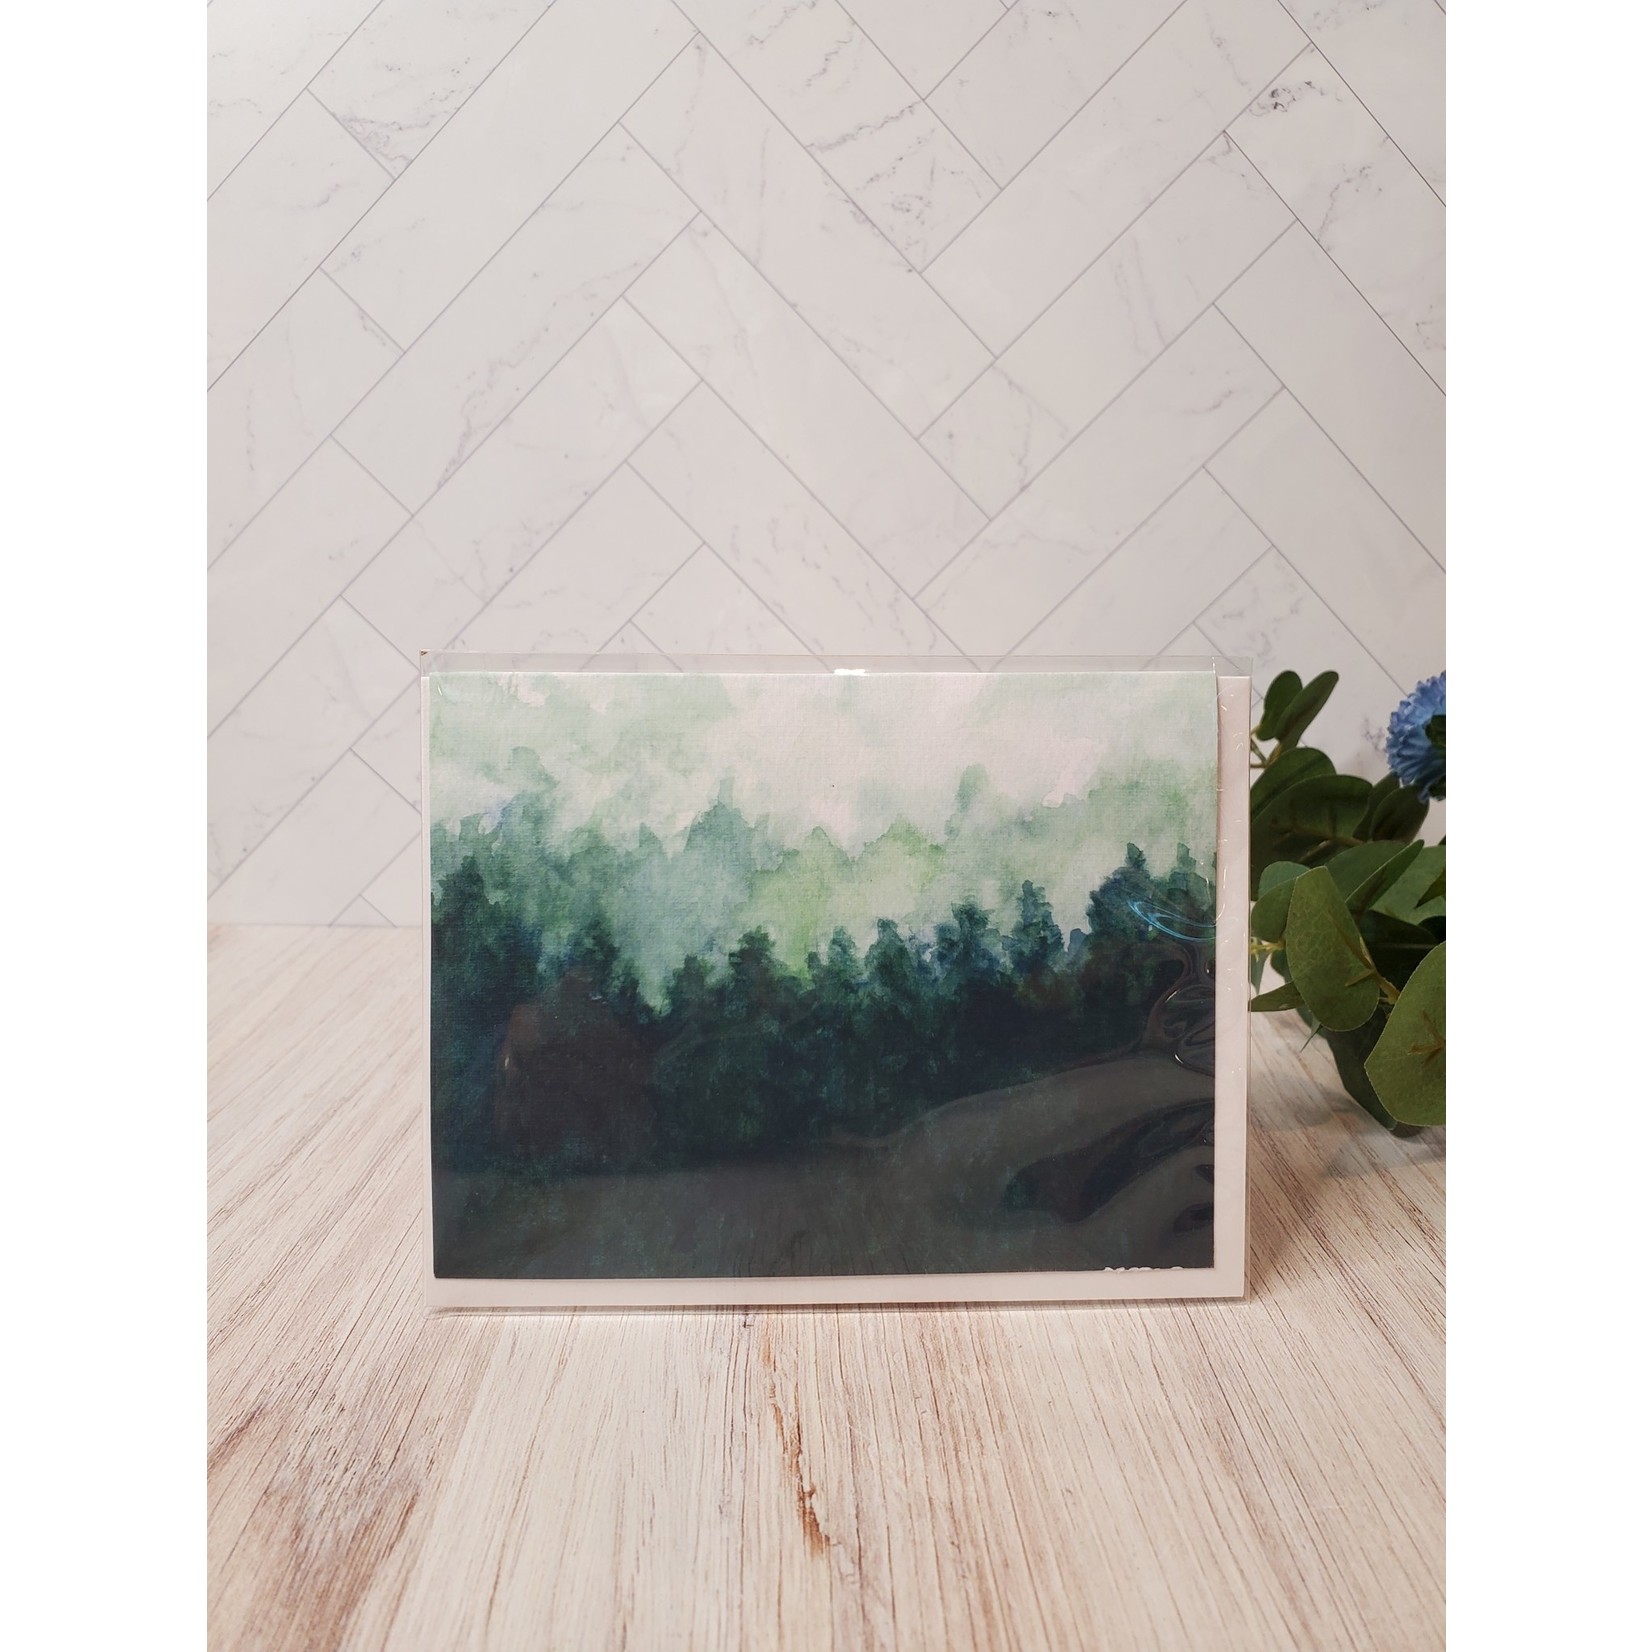 Kelley Werner Arts Notecard - "Forest Mist"